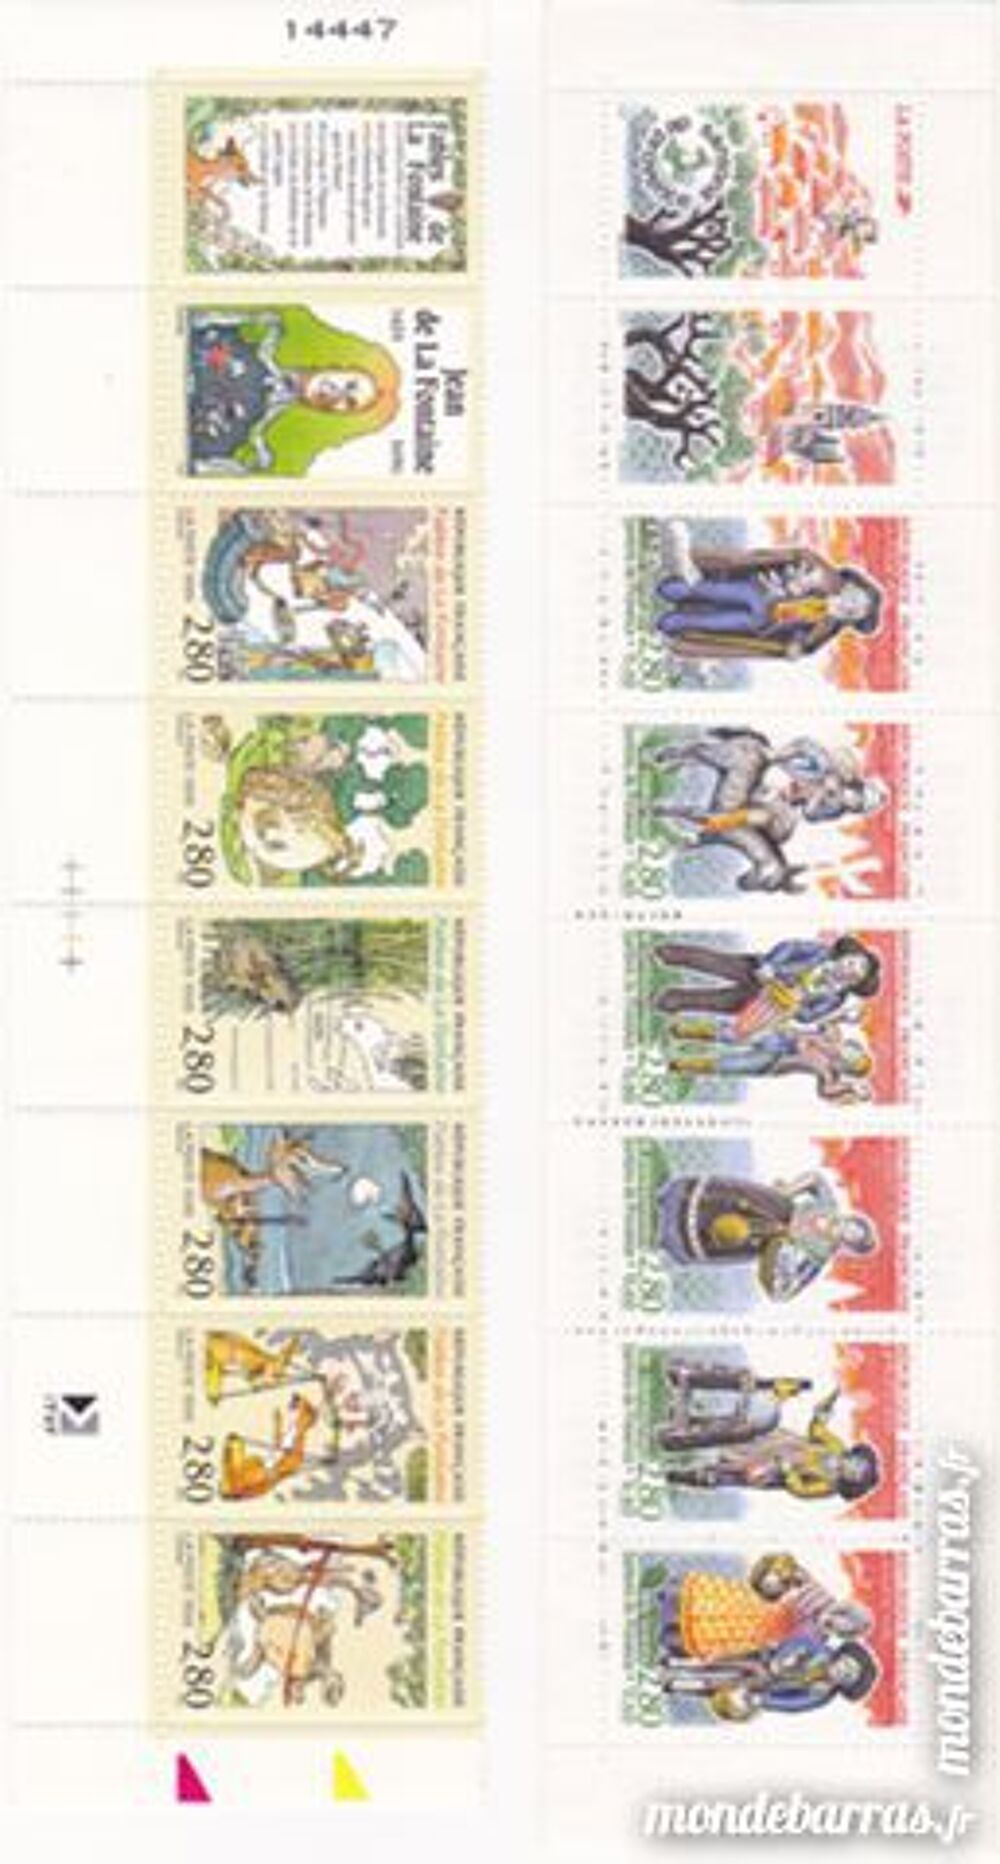 France 1995 timbres poste neufs , blocs , carnets 